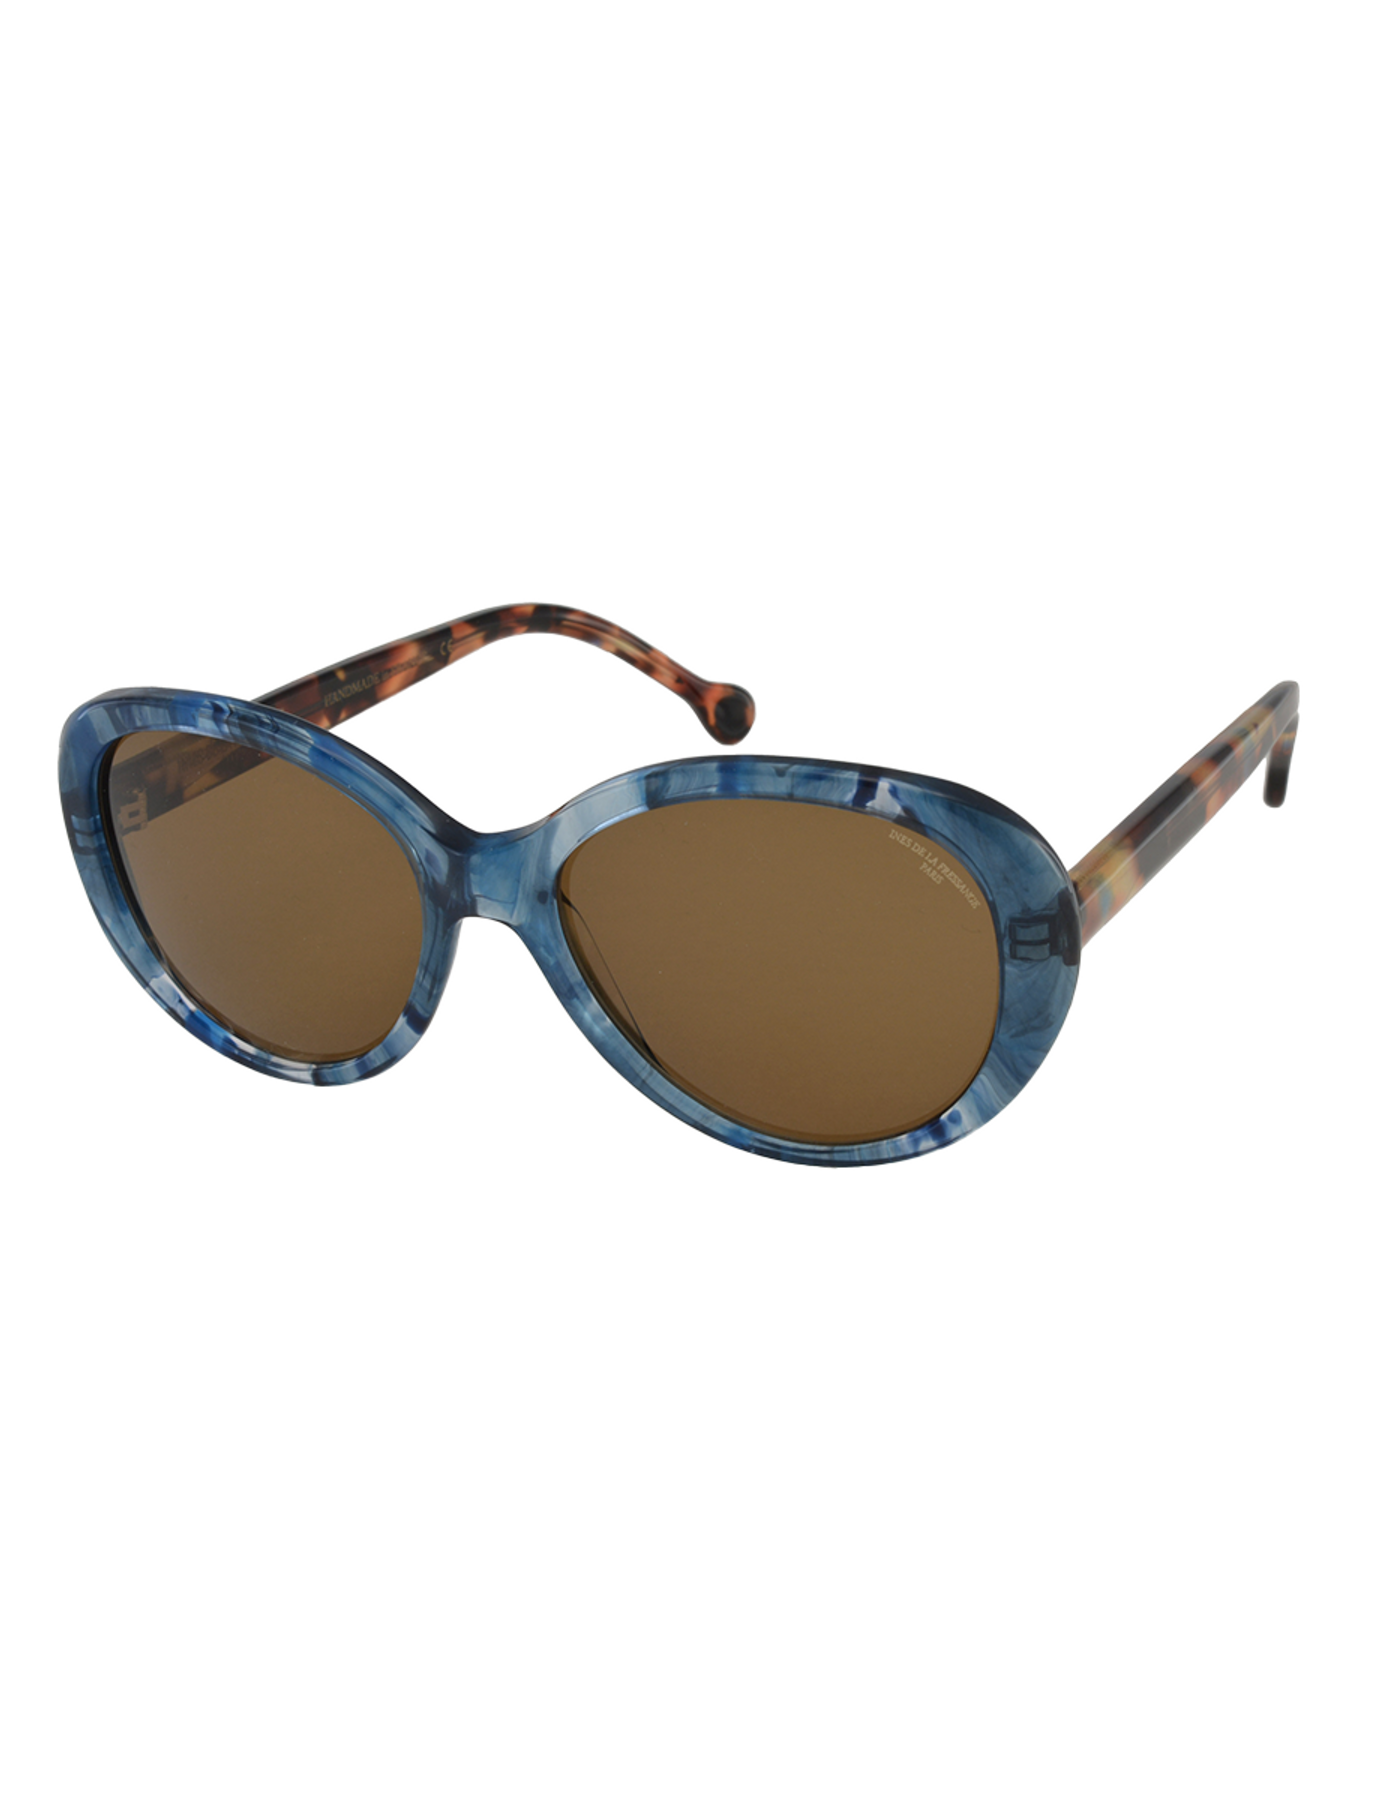 sunglasses-sofia-blue